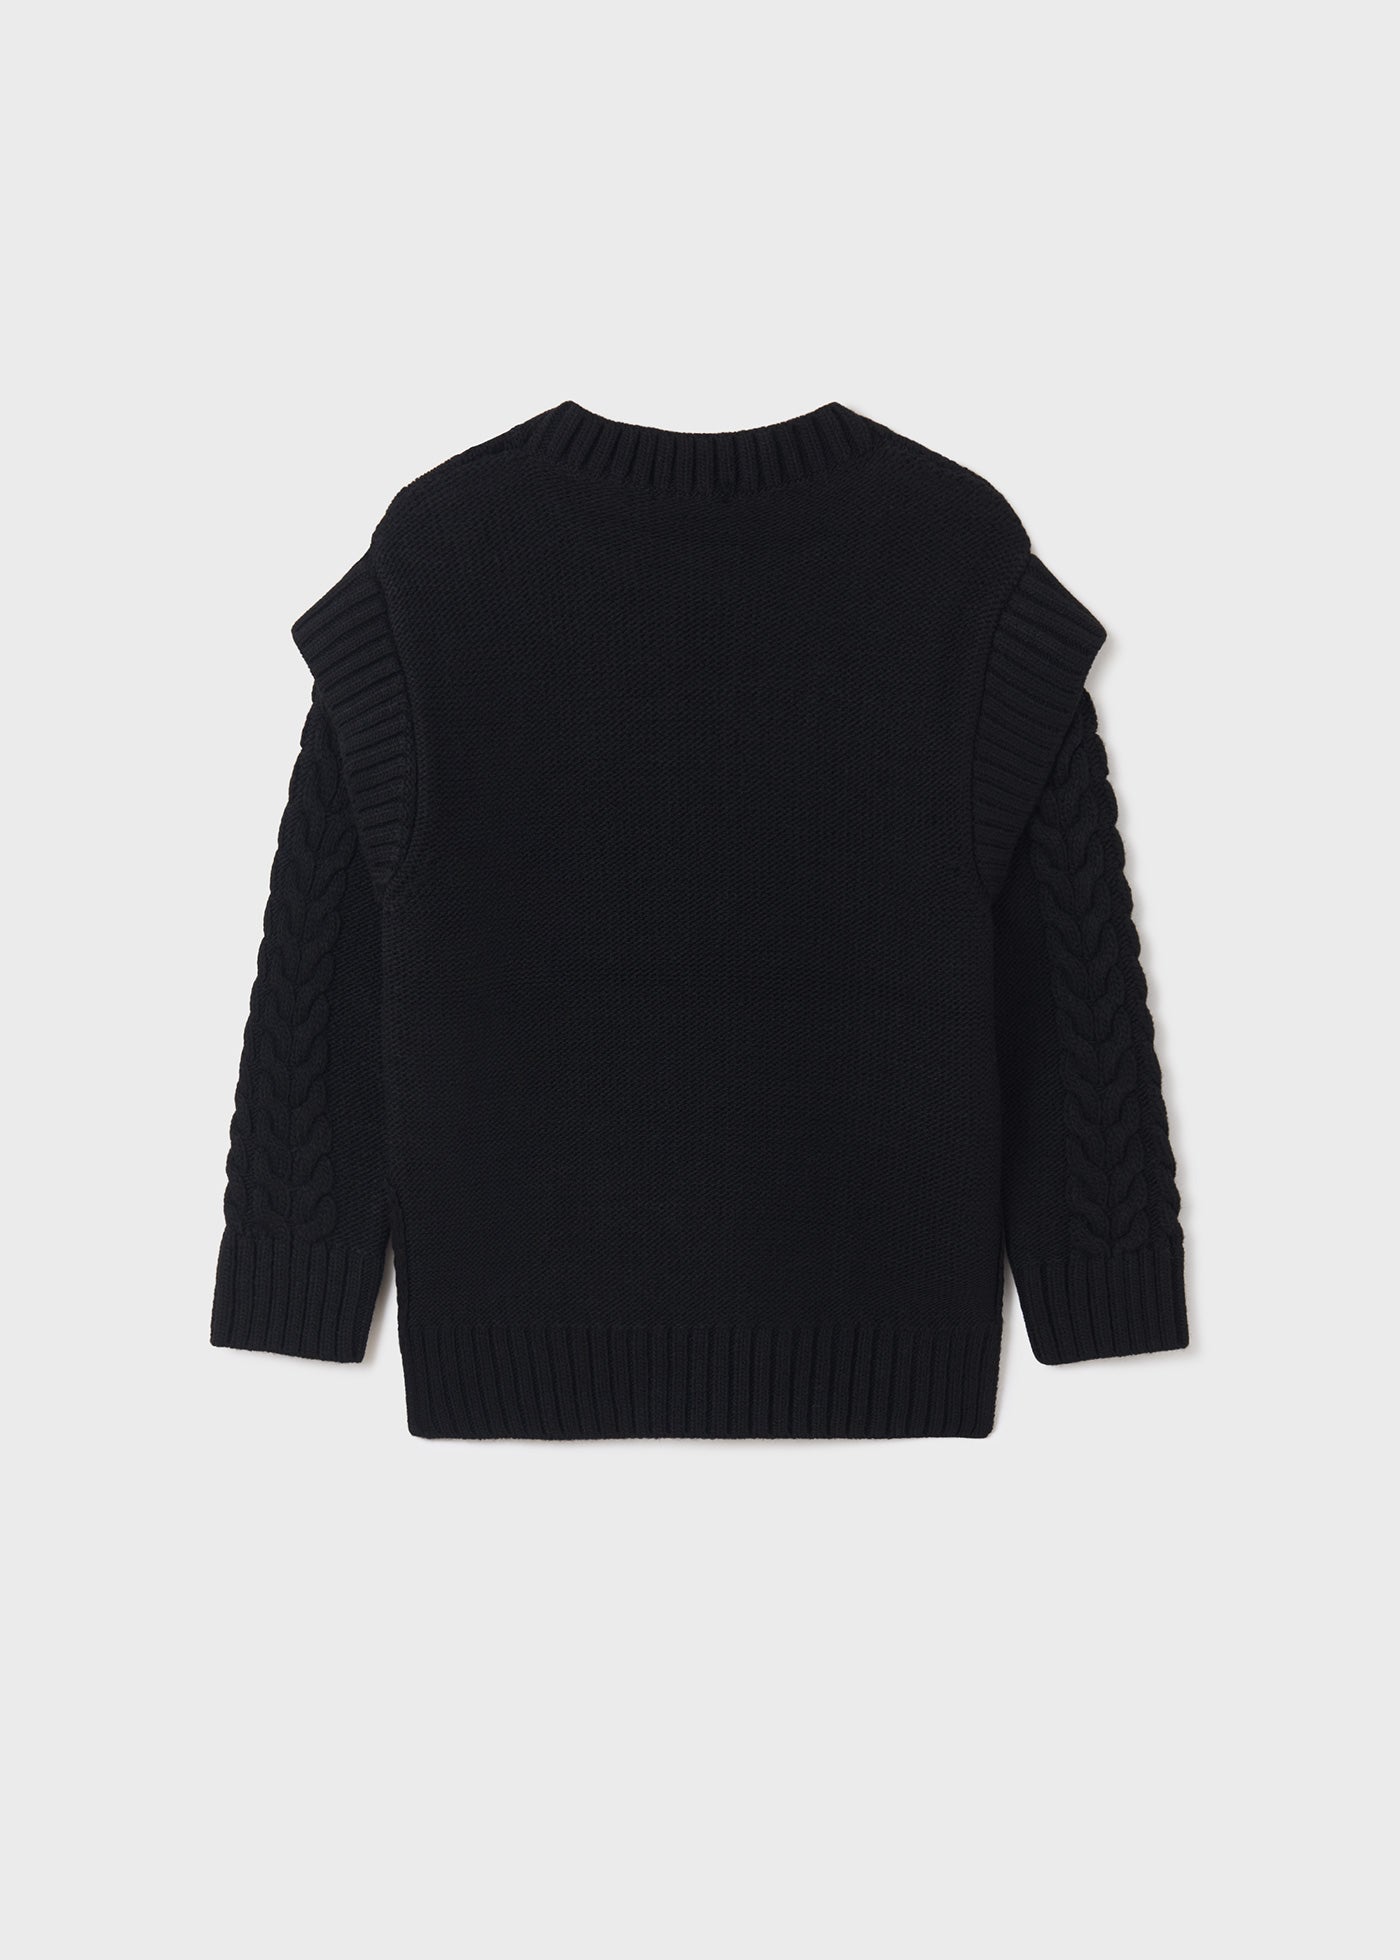 Braided Sweater- Black